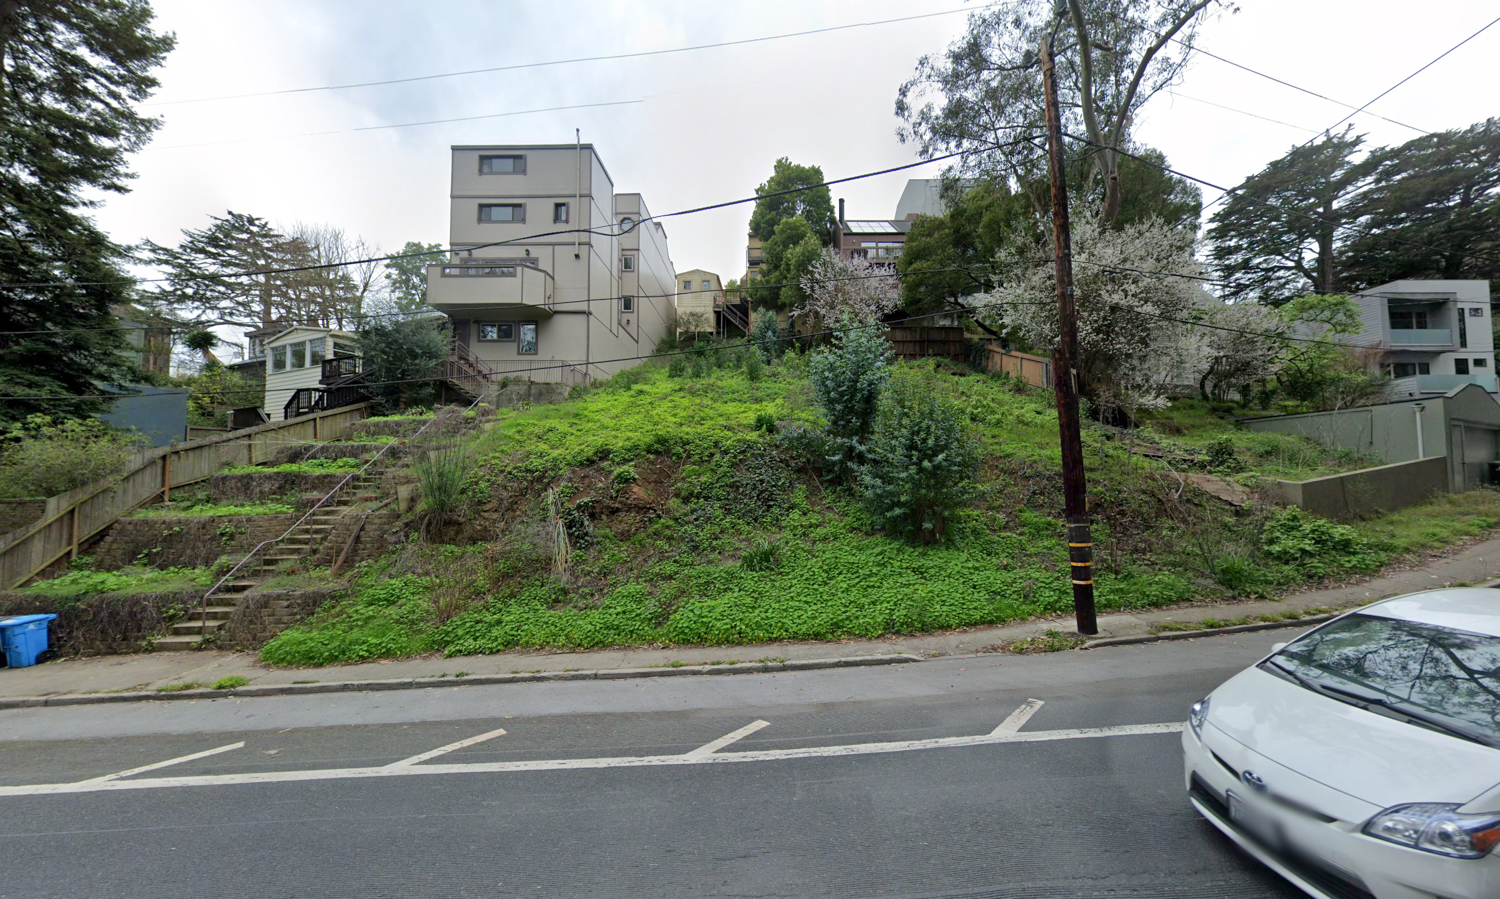 1247 Bosworth Street, image via Google Street View